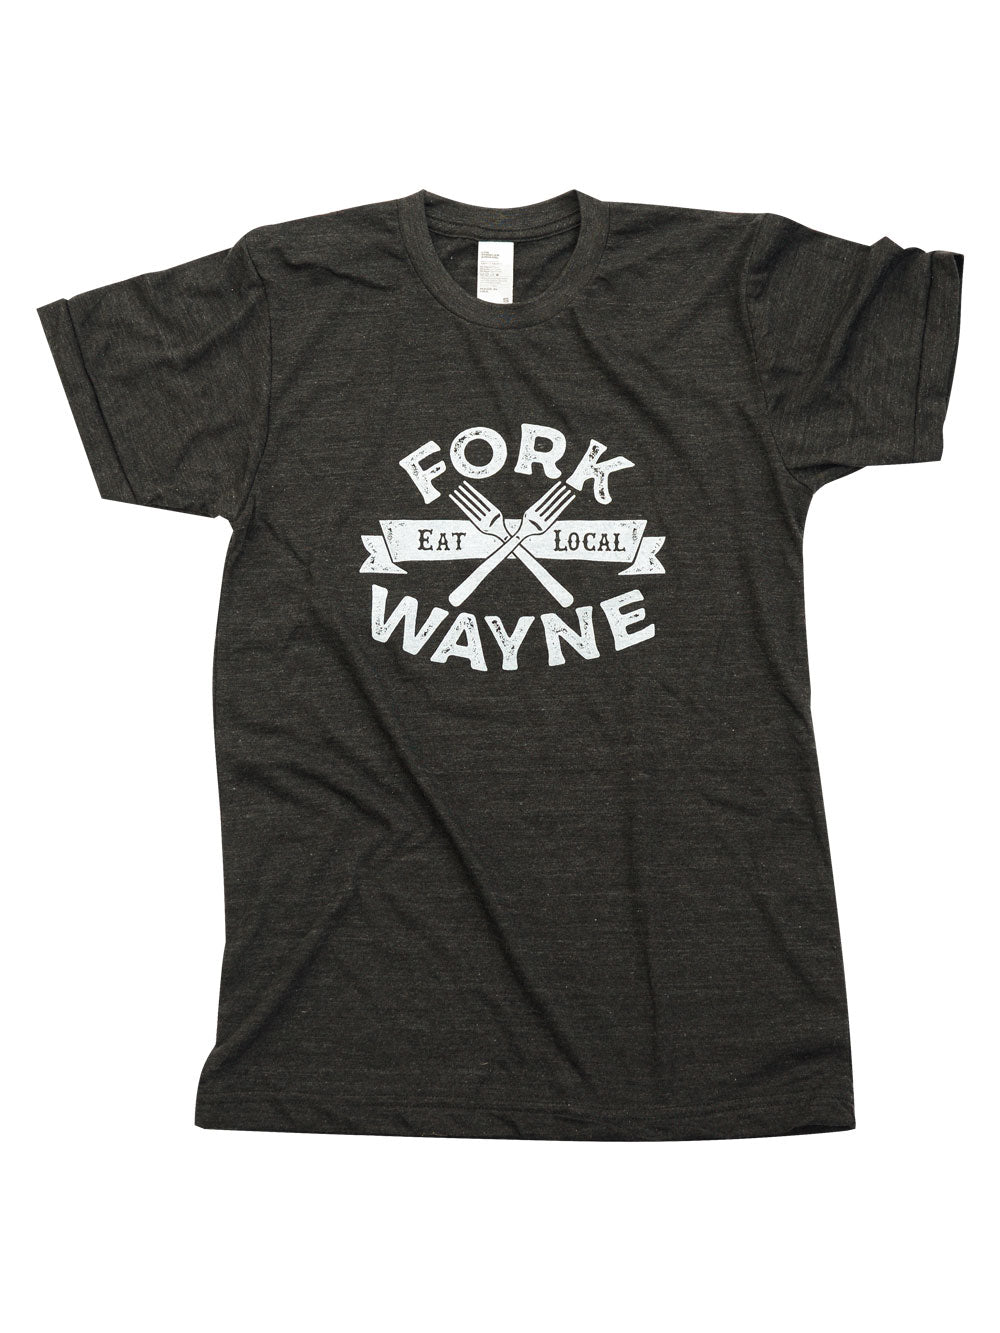 Fork Wayne Eat Local t-shirt